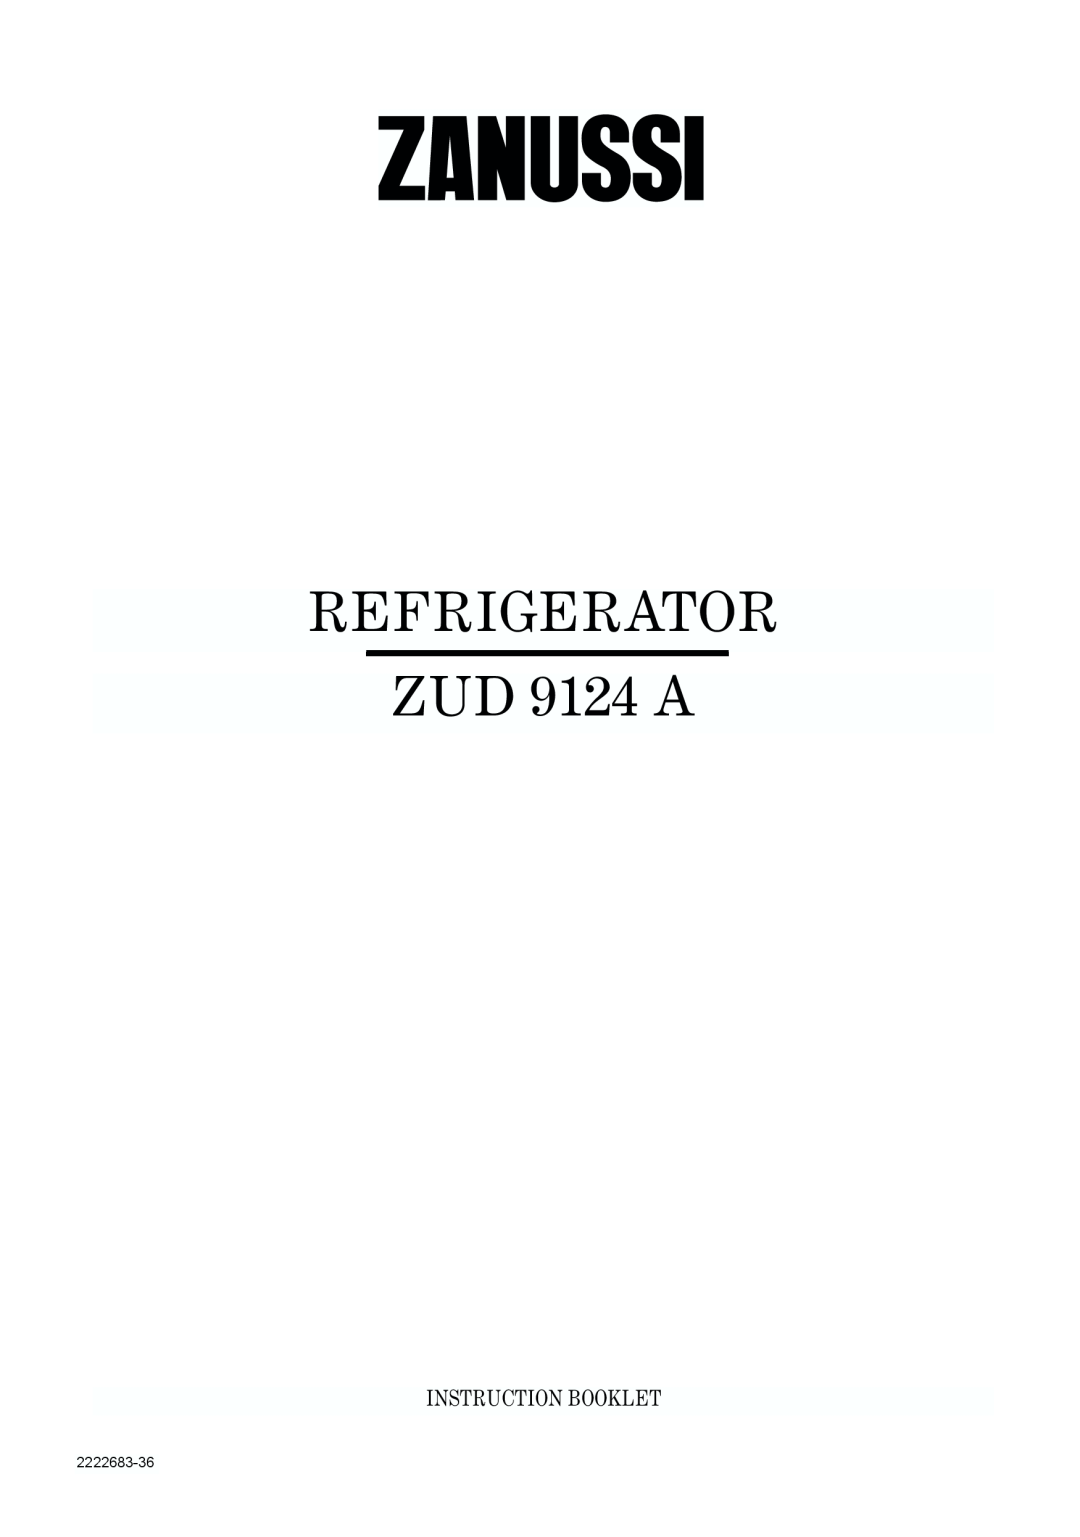 Zanussi manual REFRIGERATOR ZUD 9124 A, Instruction Booklet, 2222683-36 